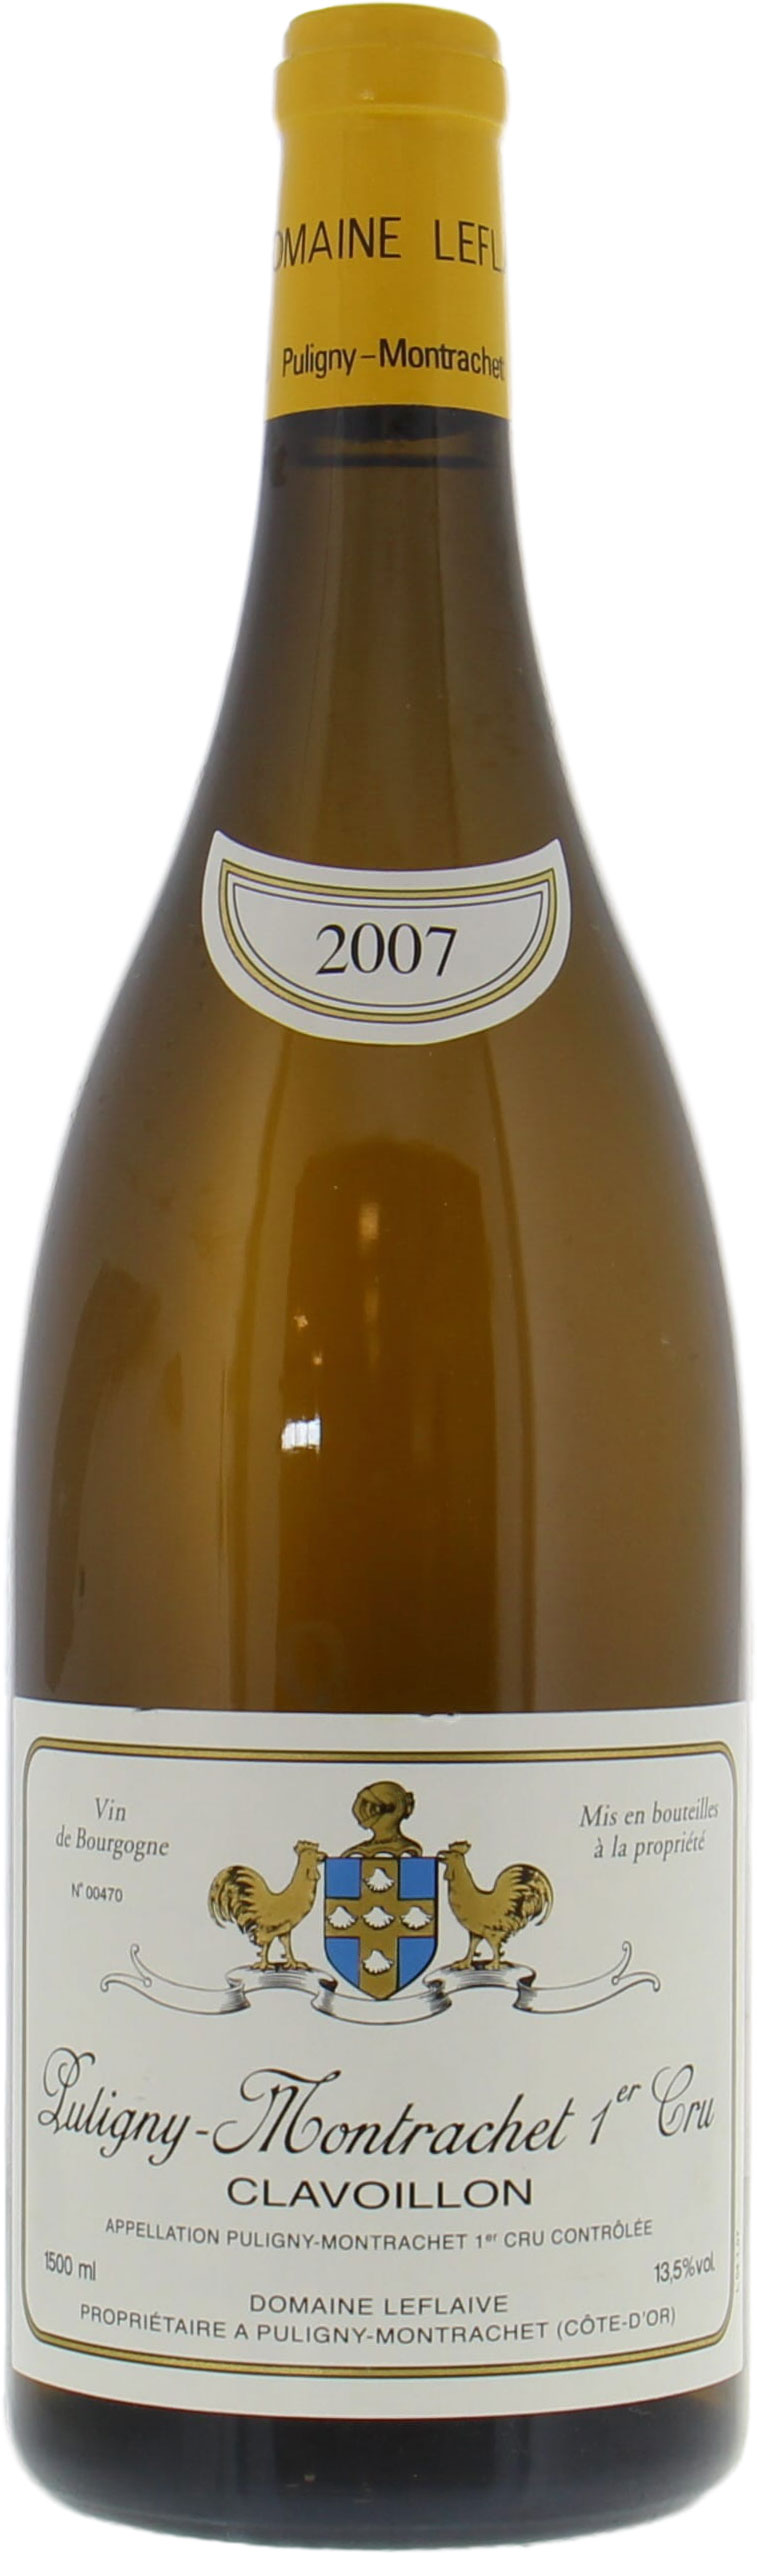 Domaine Leflaive - Puligny Montrachet Clavoillon 2007 perfect